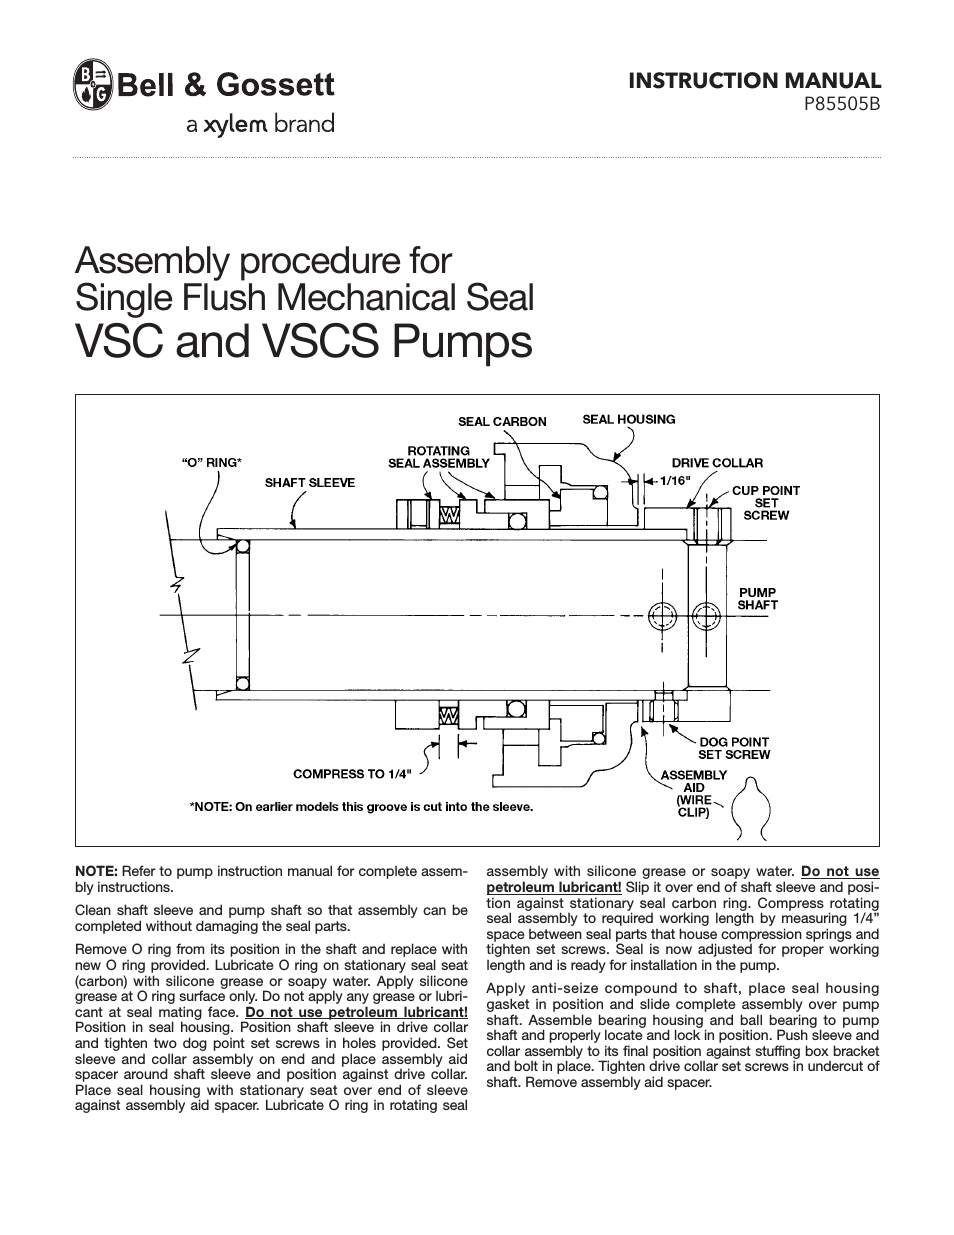 P85505B Assembly Procedure for Single Flush Mechanical Seal